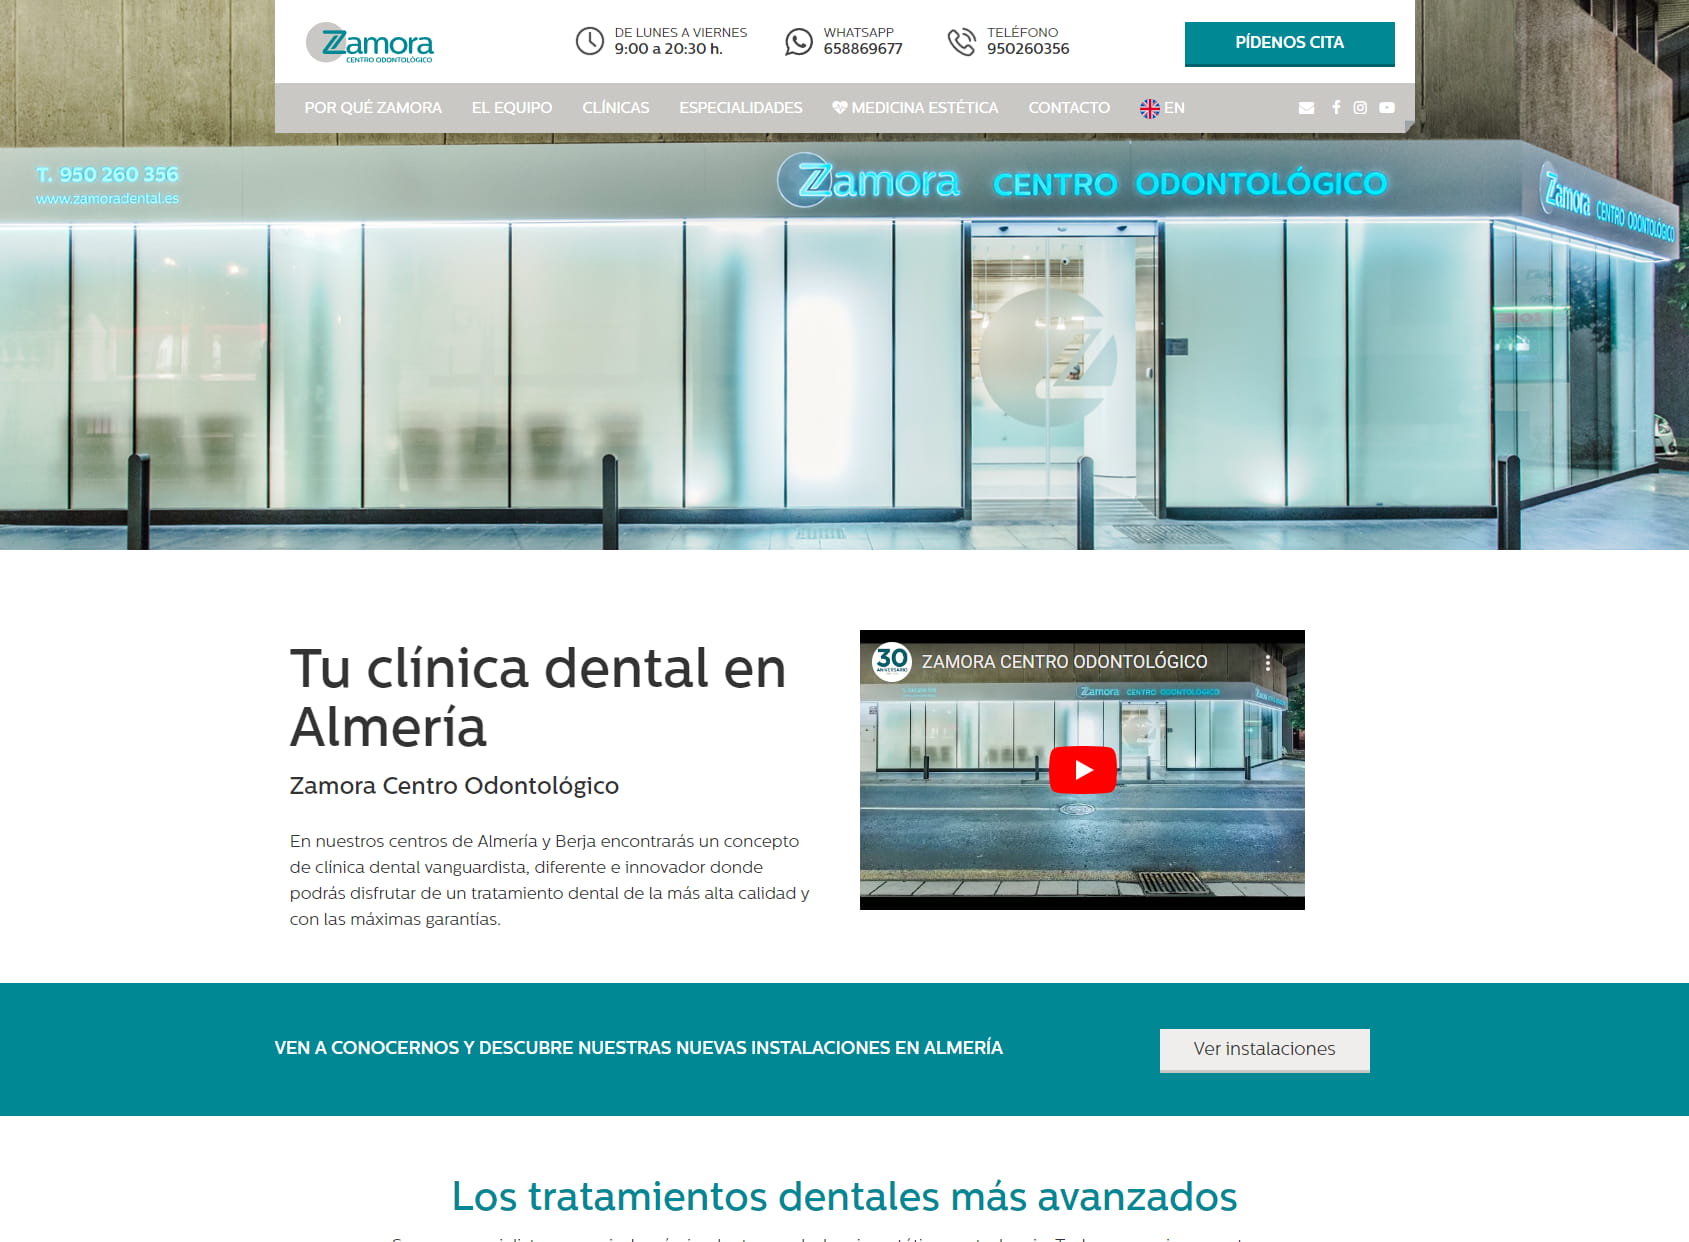 Zamora Centro Odontológico